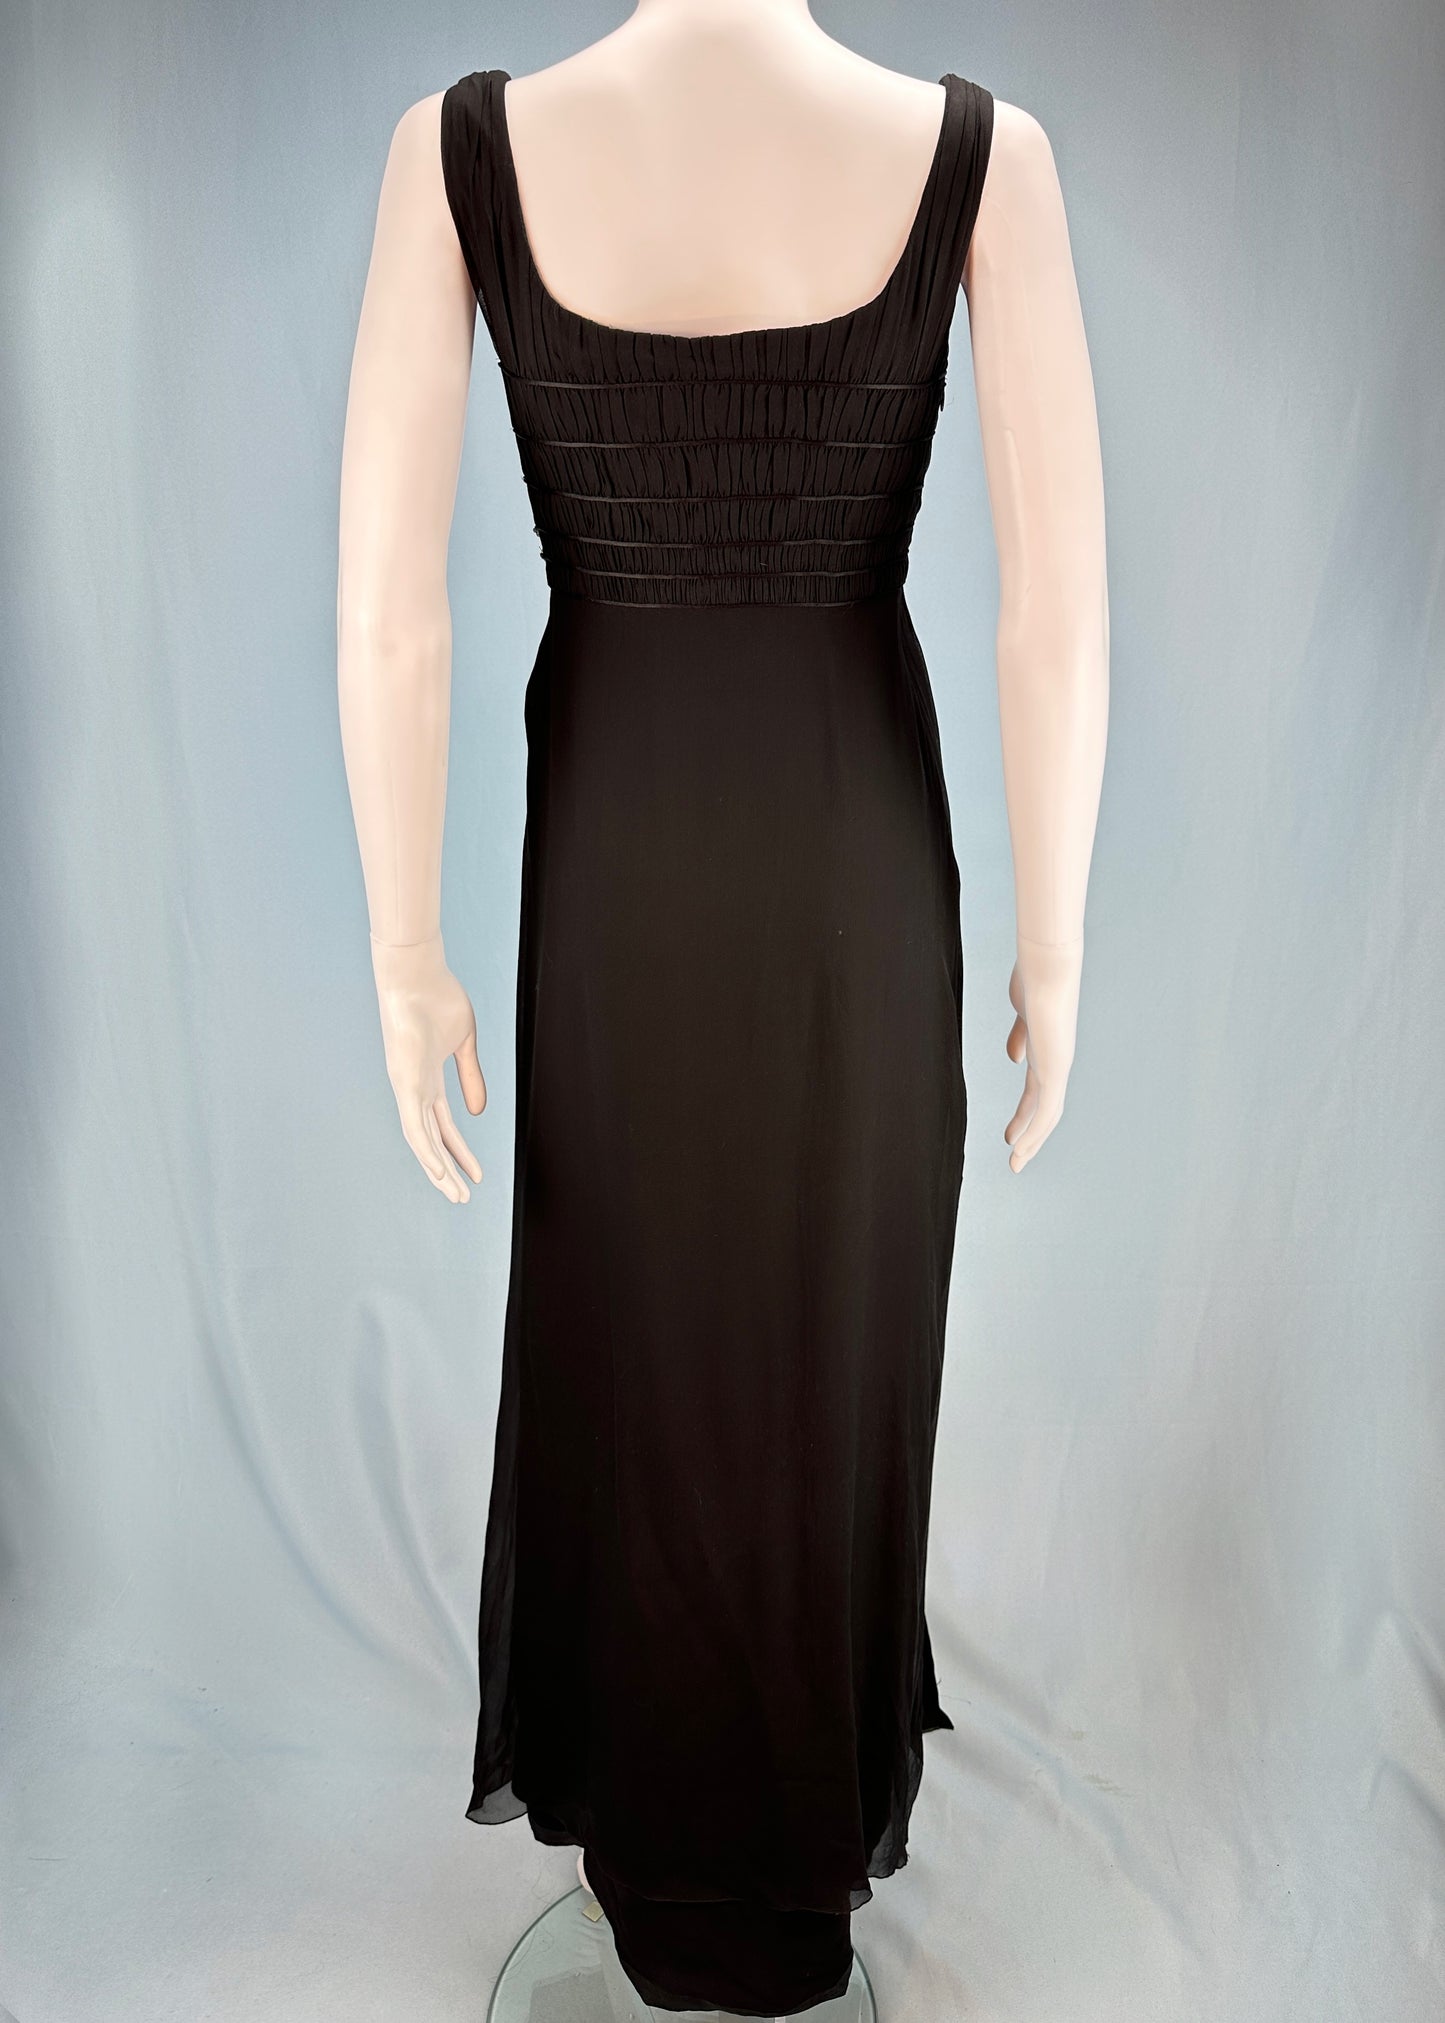 Versace Fall 1998 Runway Black Grecian Style Medusa Crystal Open Side Gown Dress